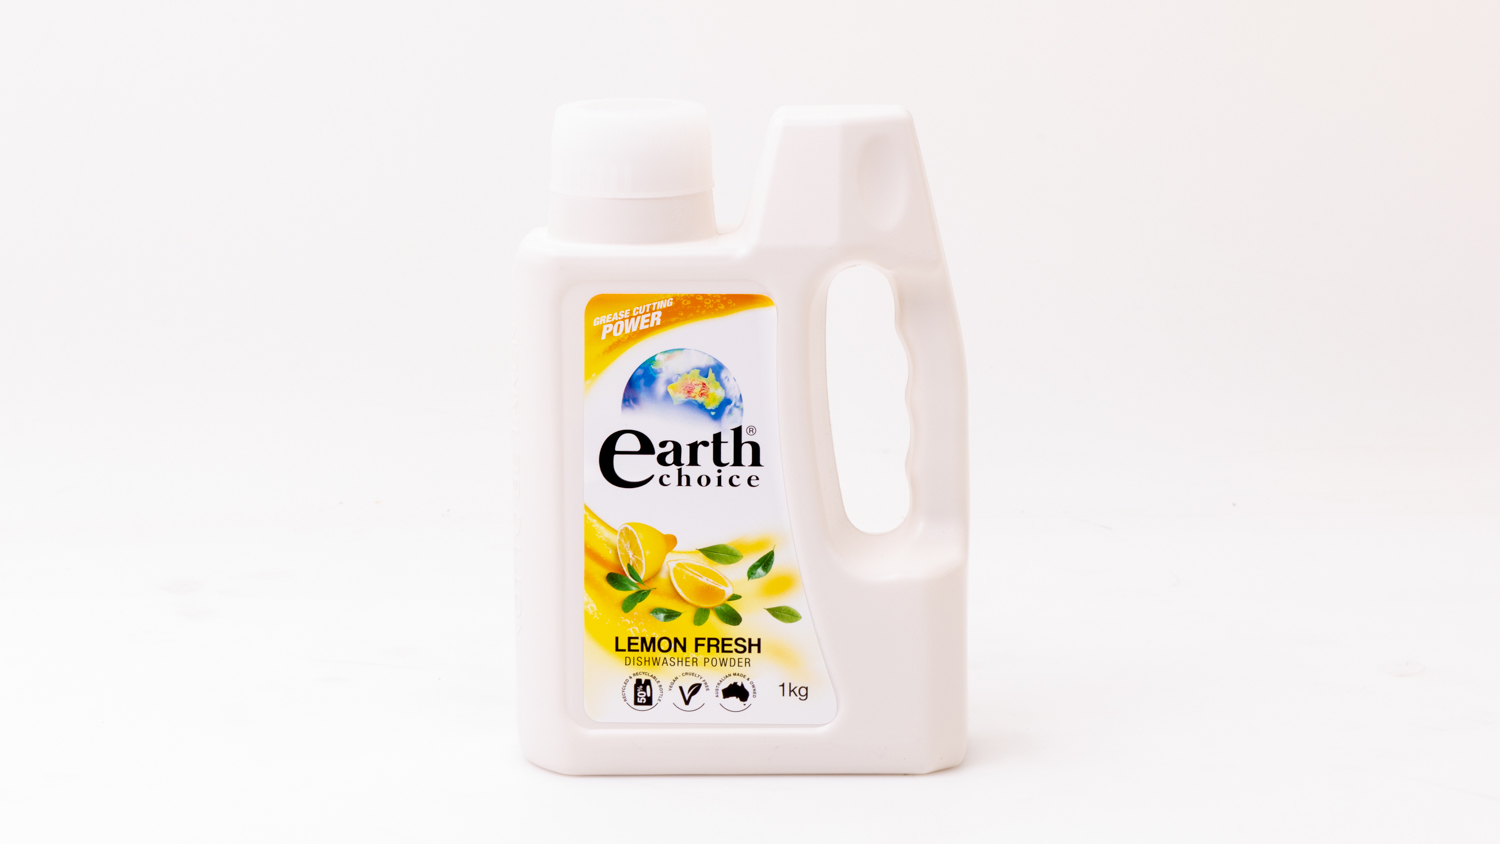 Earth Choice Lemon Fresh Dishwasher Powder carousel image